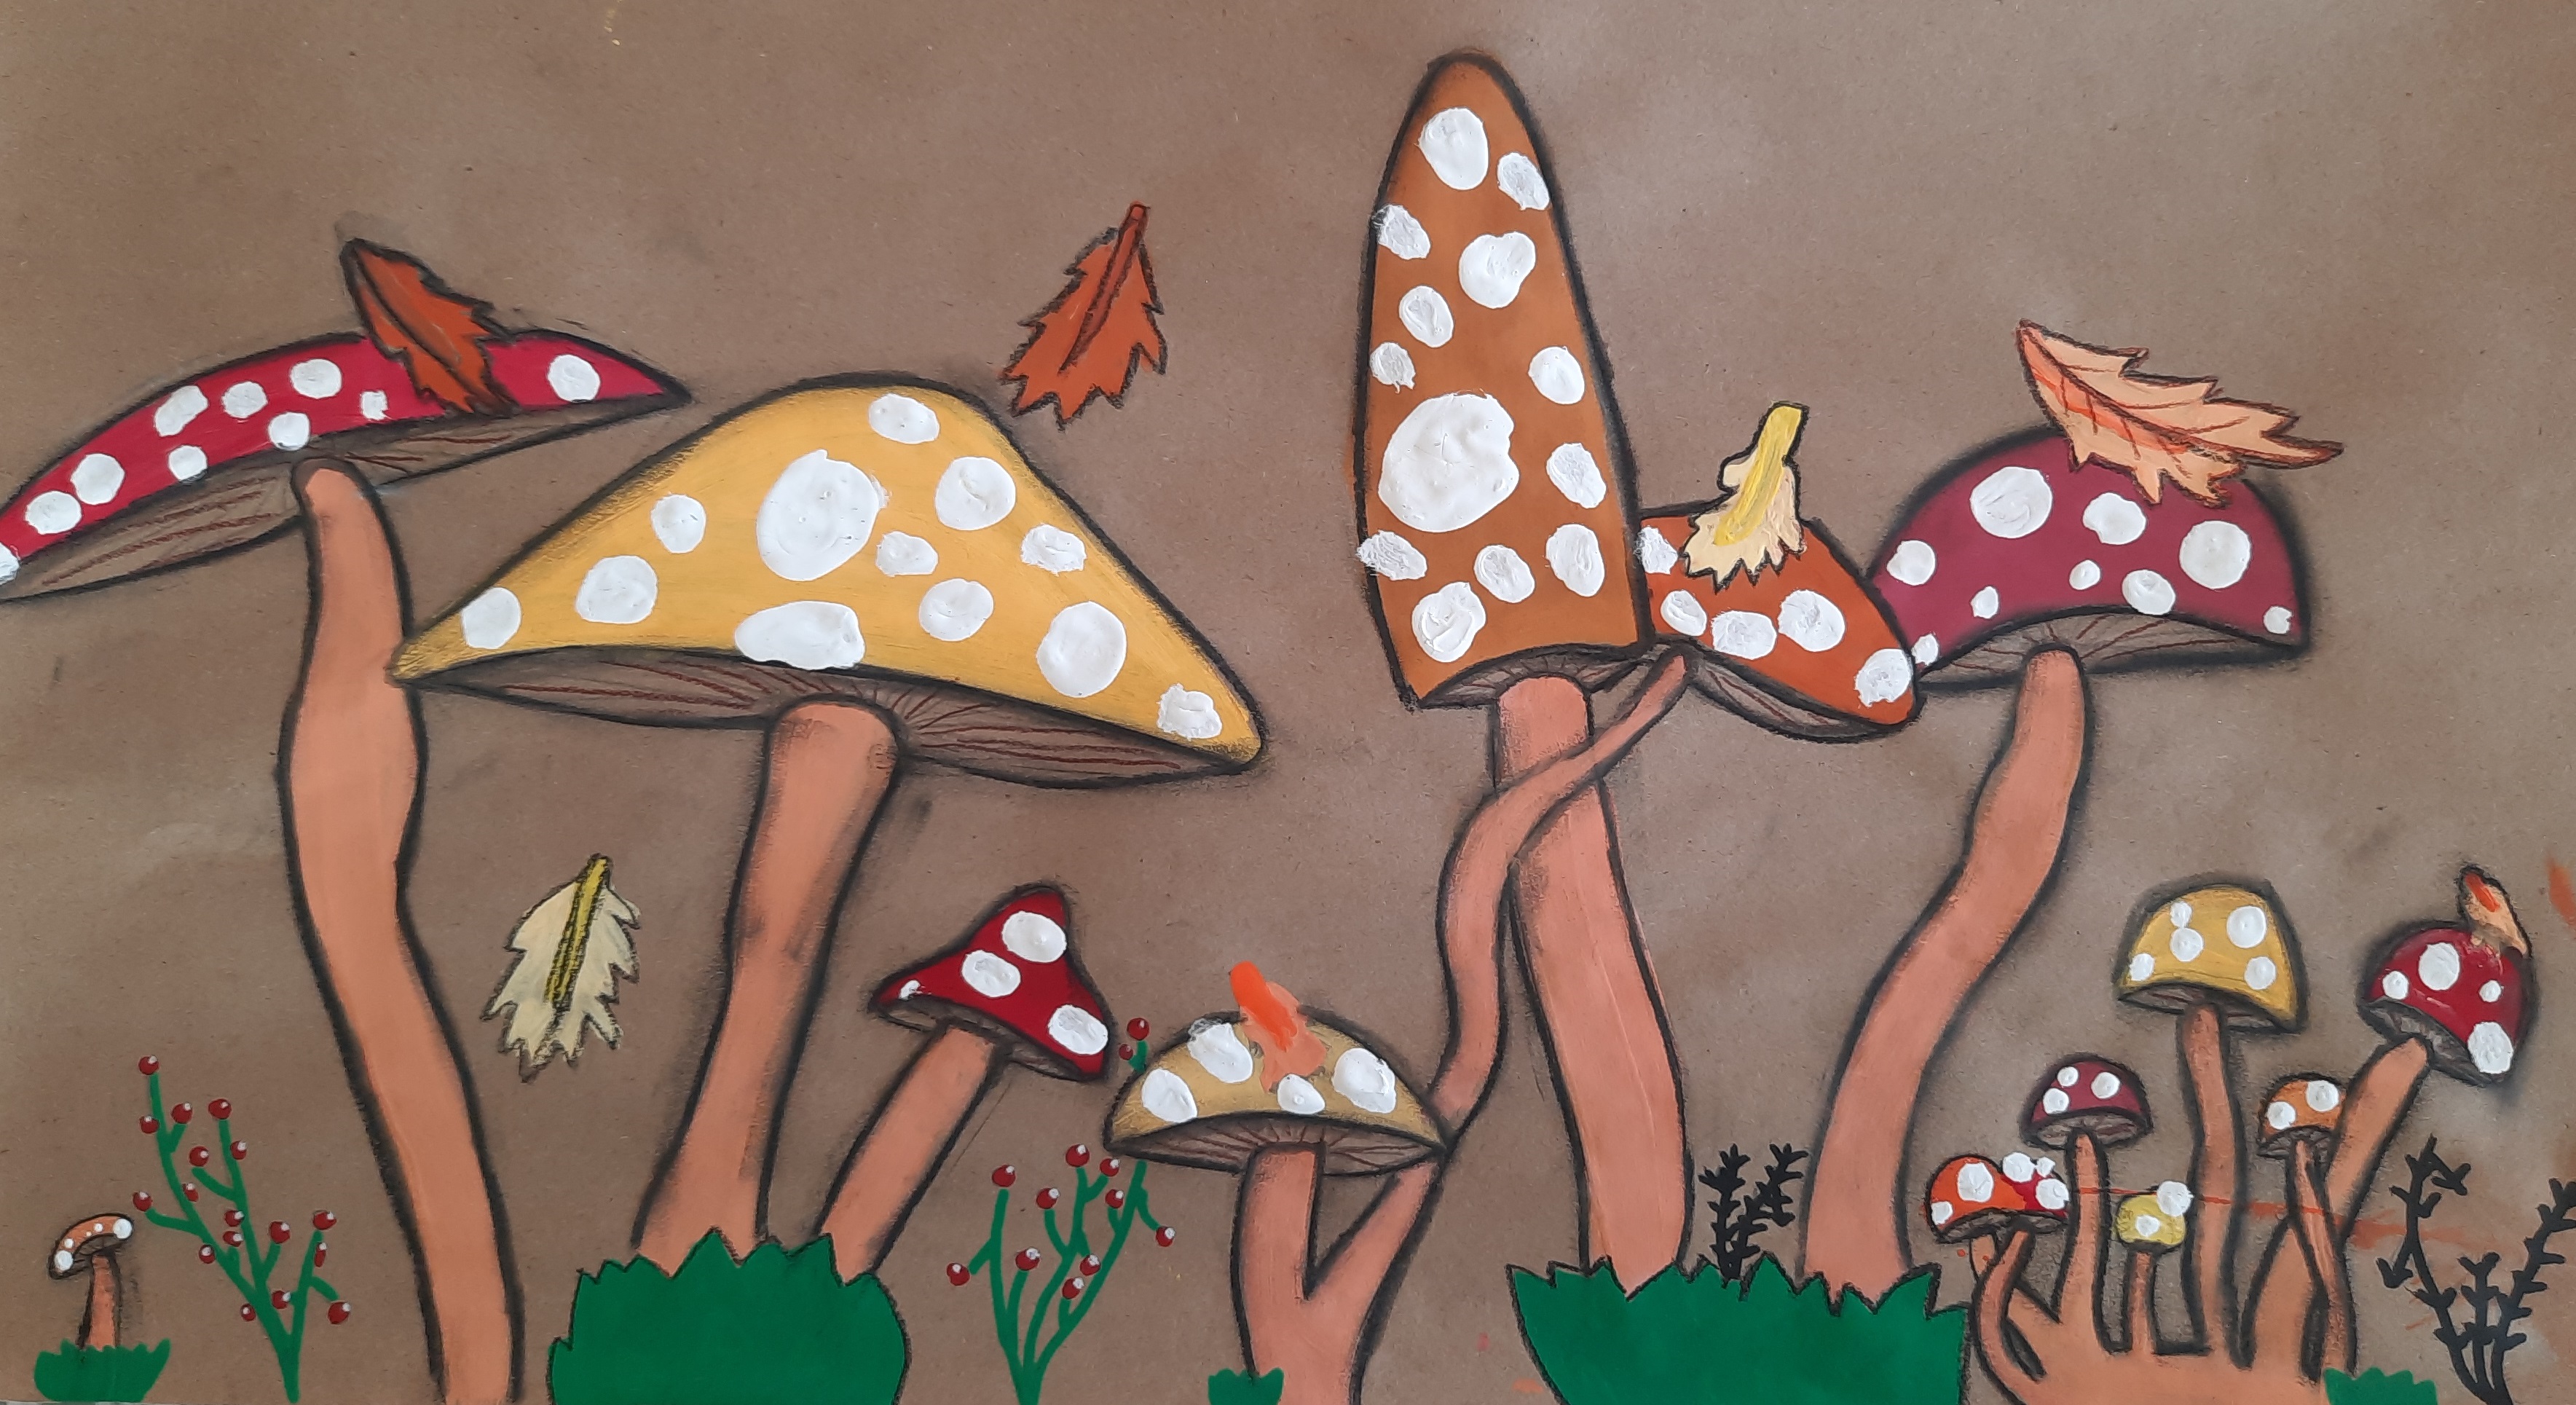 How to Paint Mushroom Rocks That's Super Simple